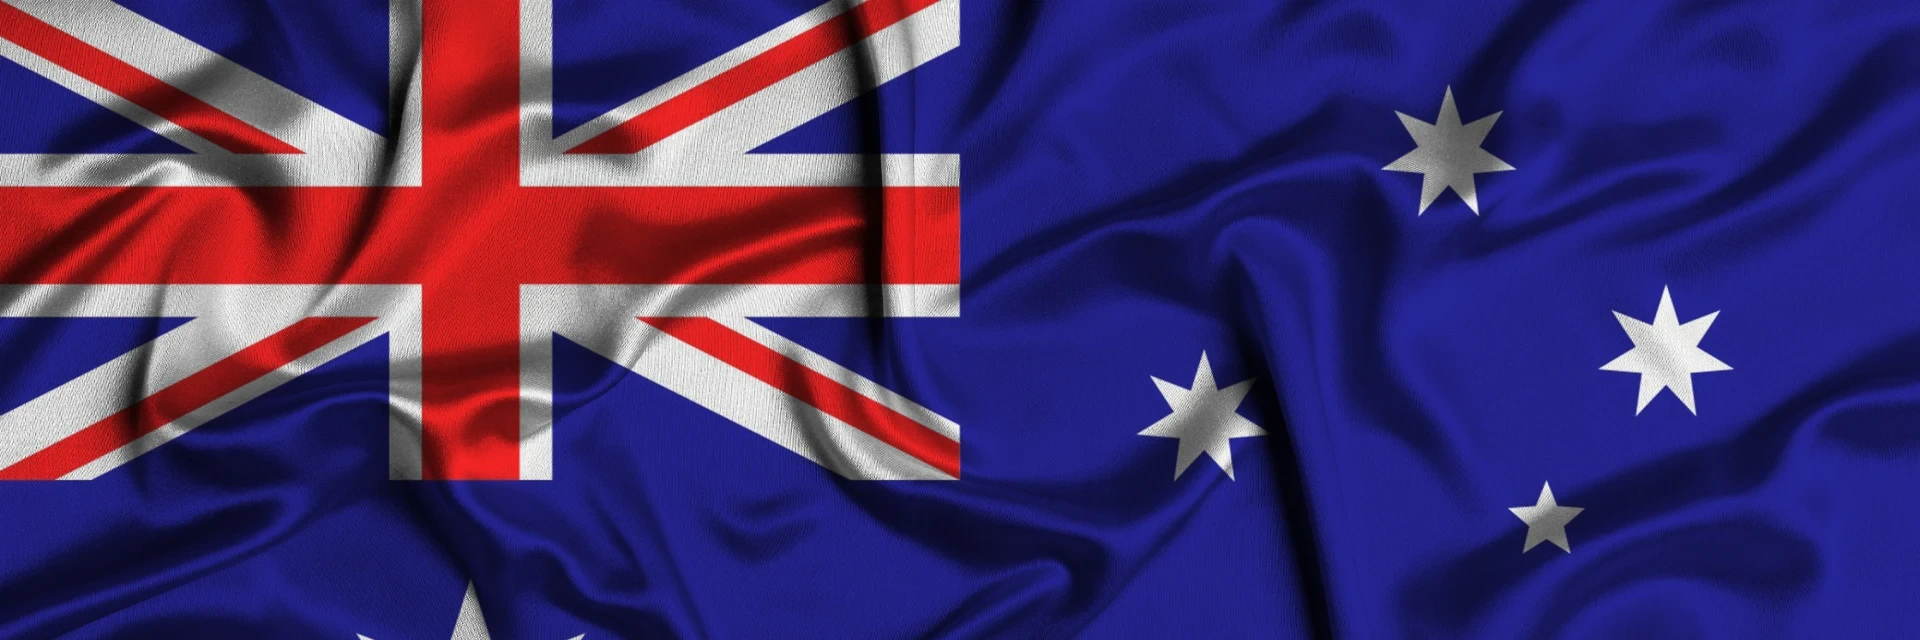 Australian flag representing the nation's beauty brands